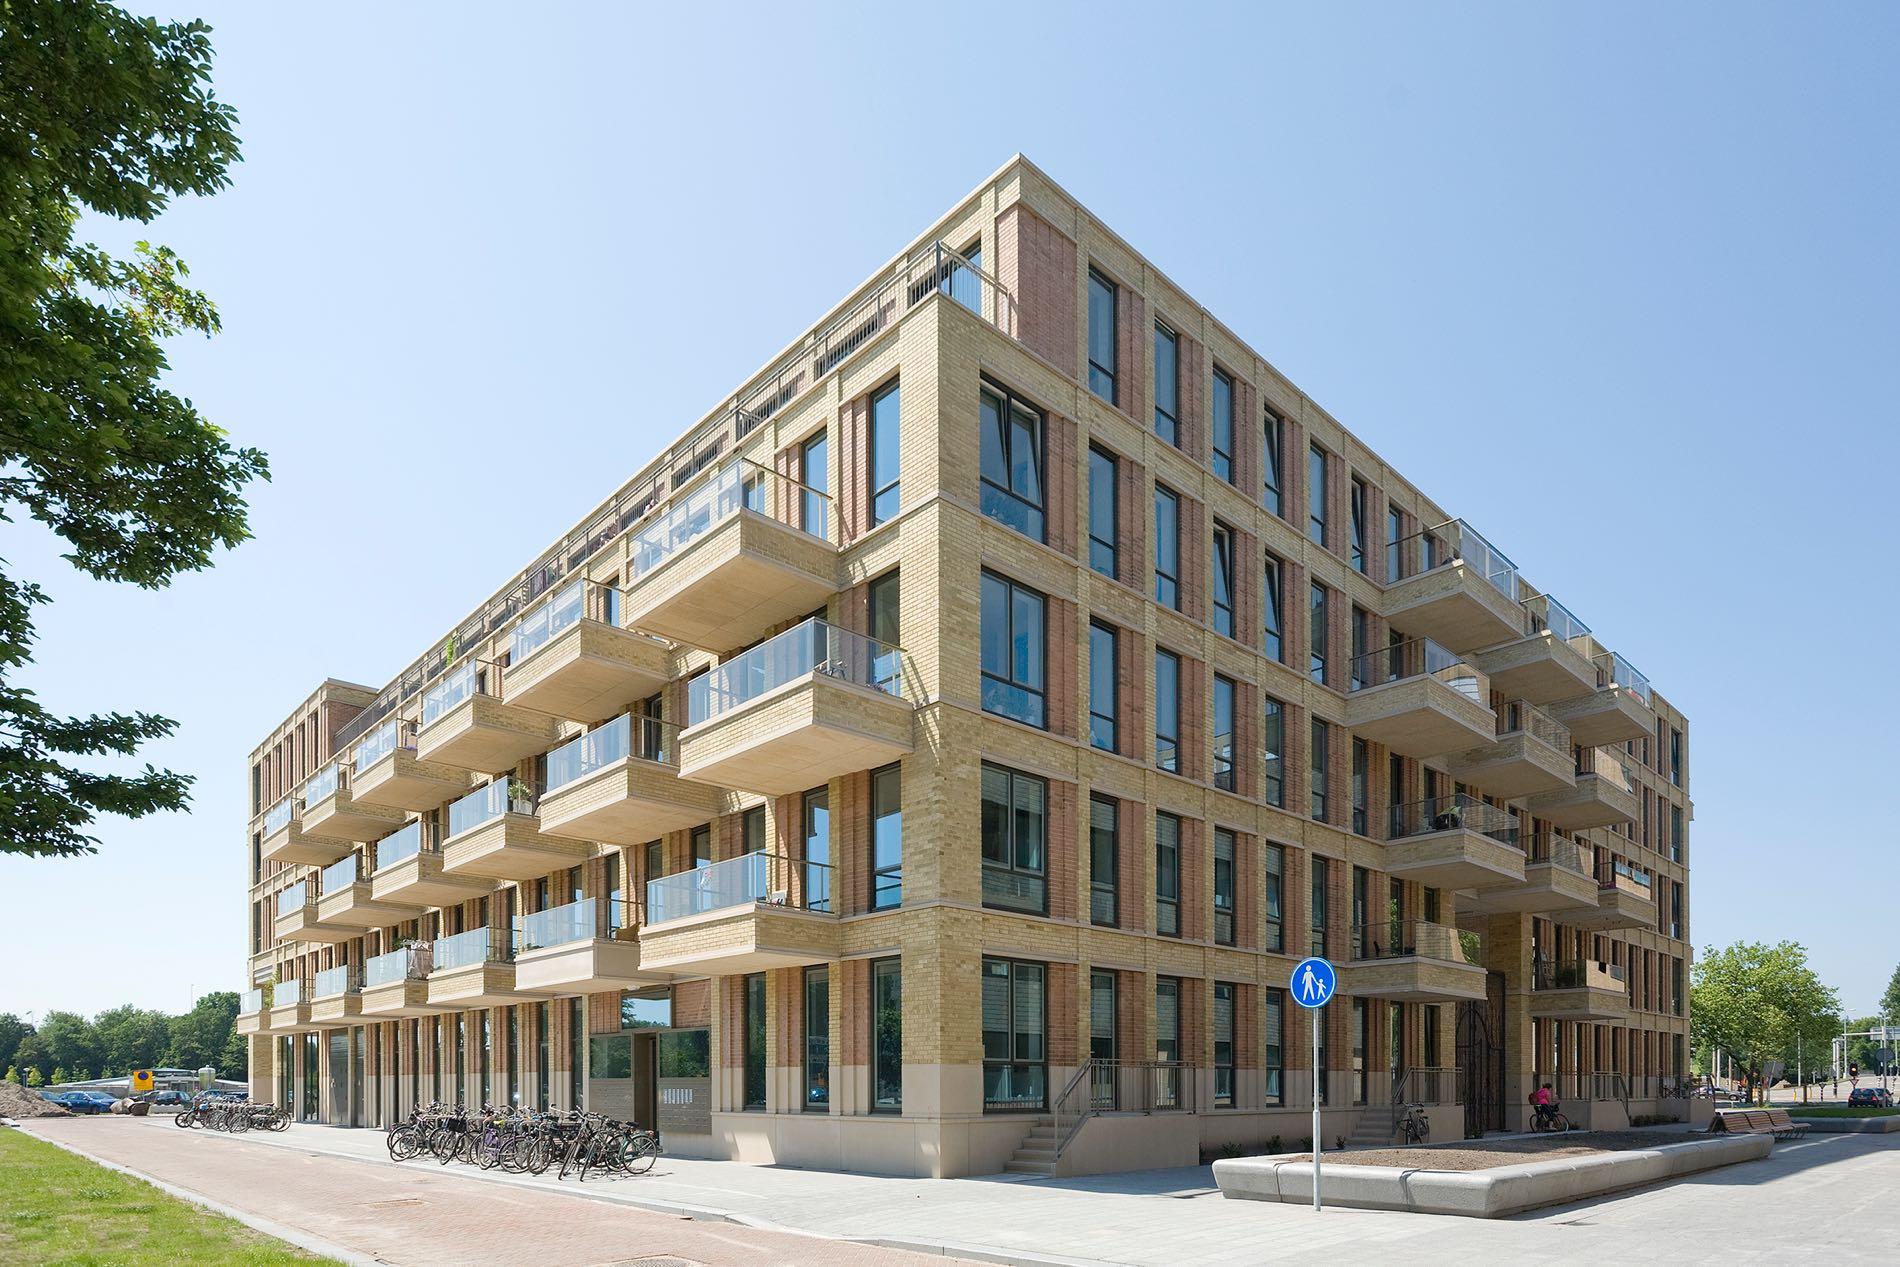 Appartementen Square 1a, Amsterdam - LEVS architecten